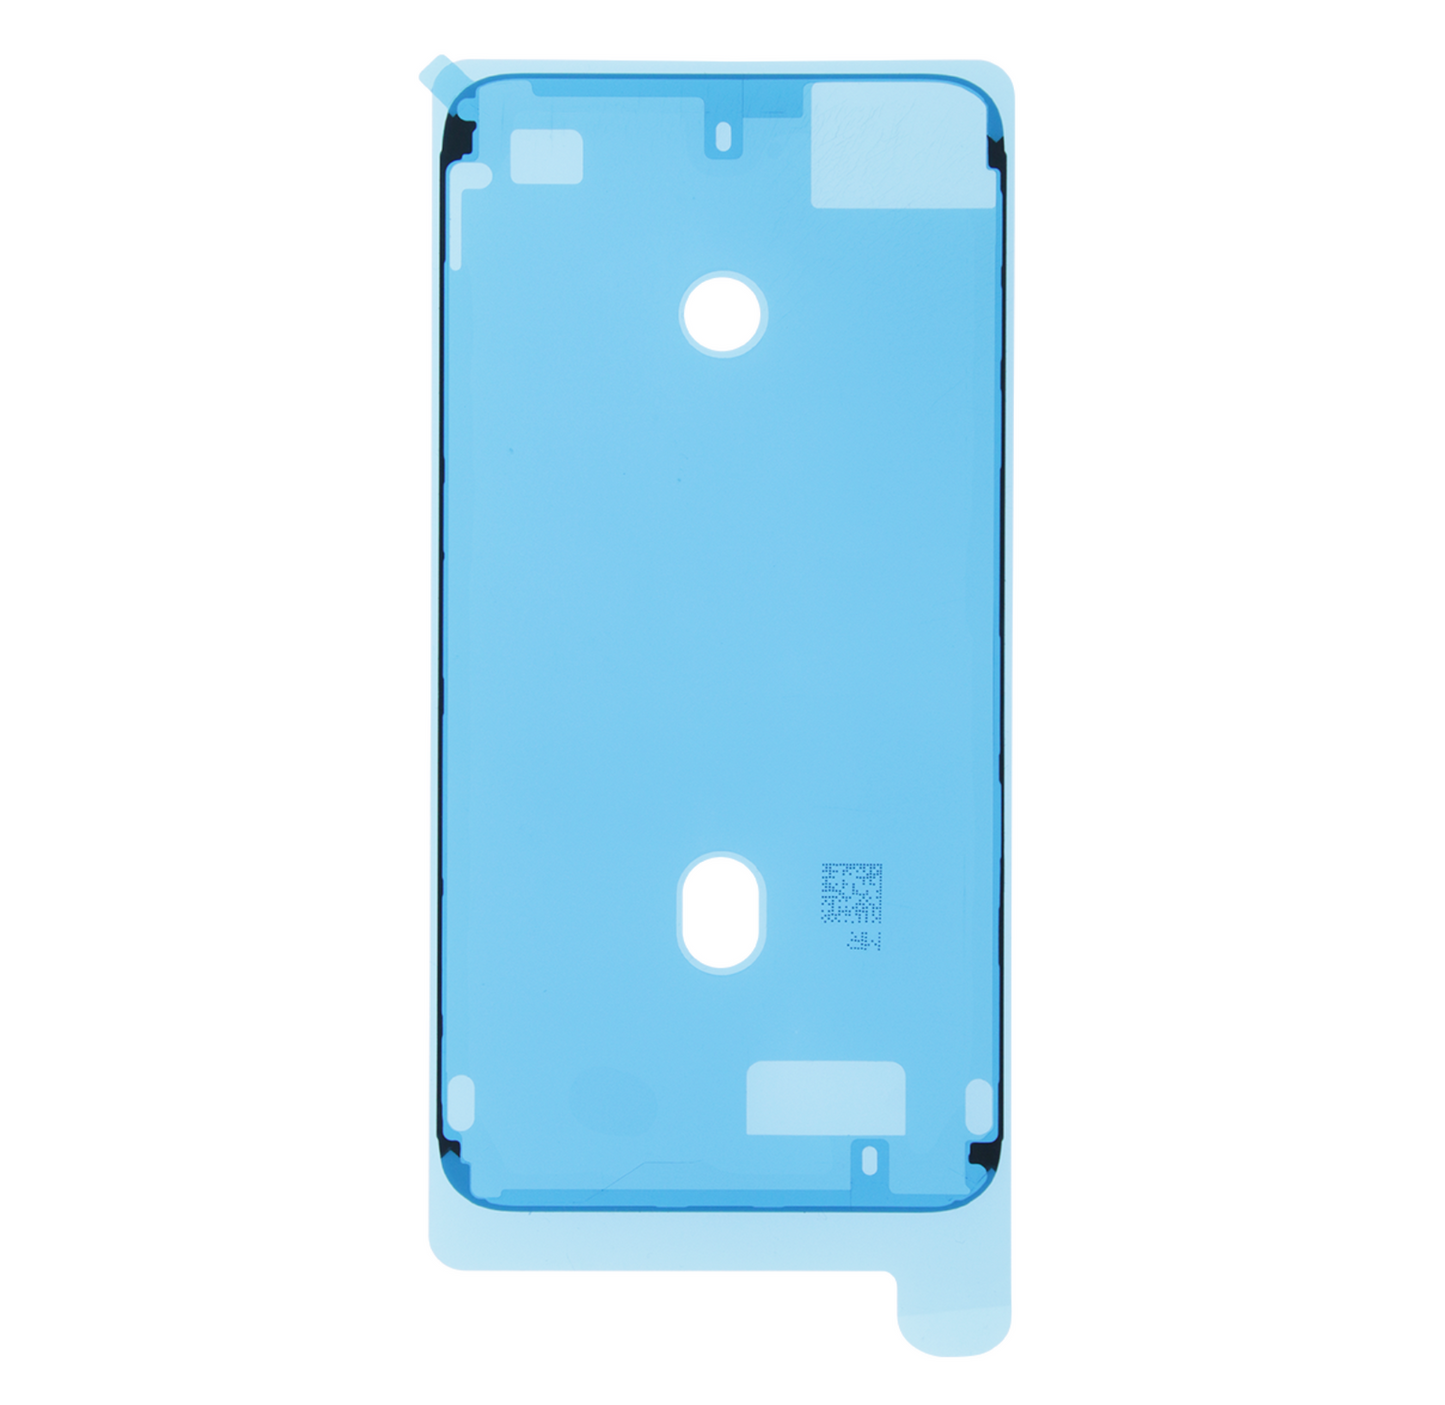 iPhone 7 Plus/8 Plus LCD Screen Gasket Adhesive-White